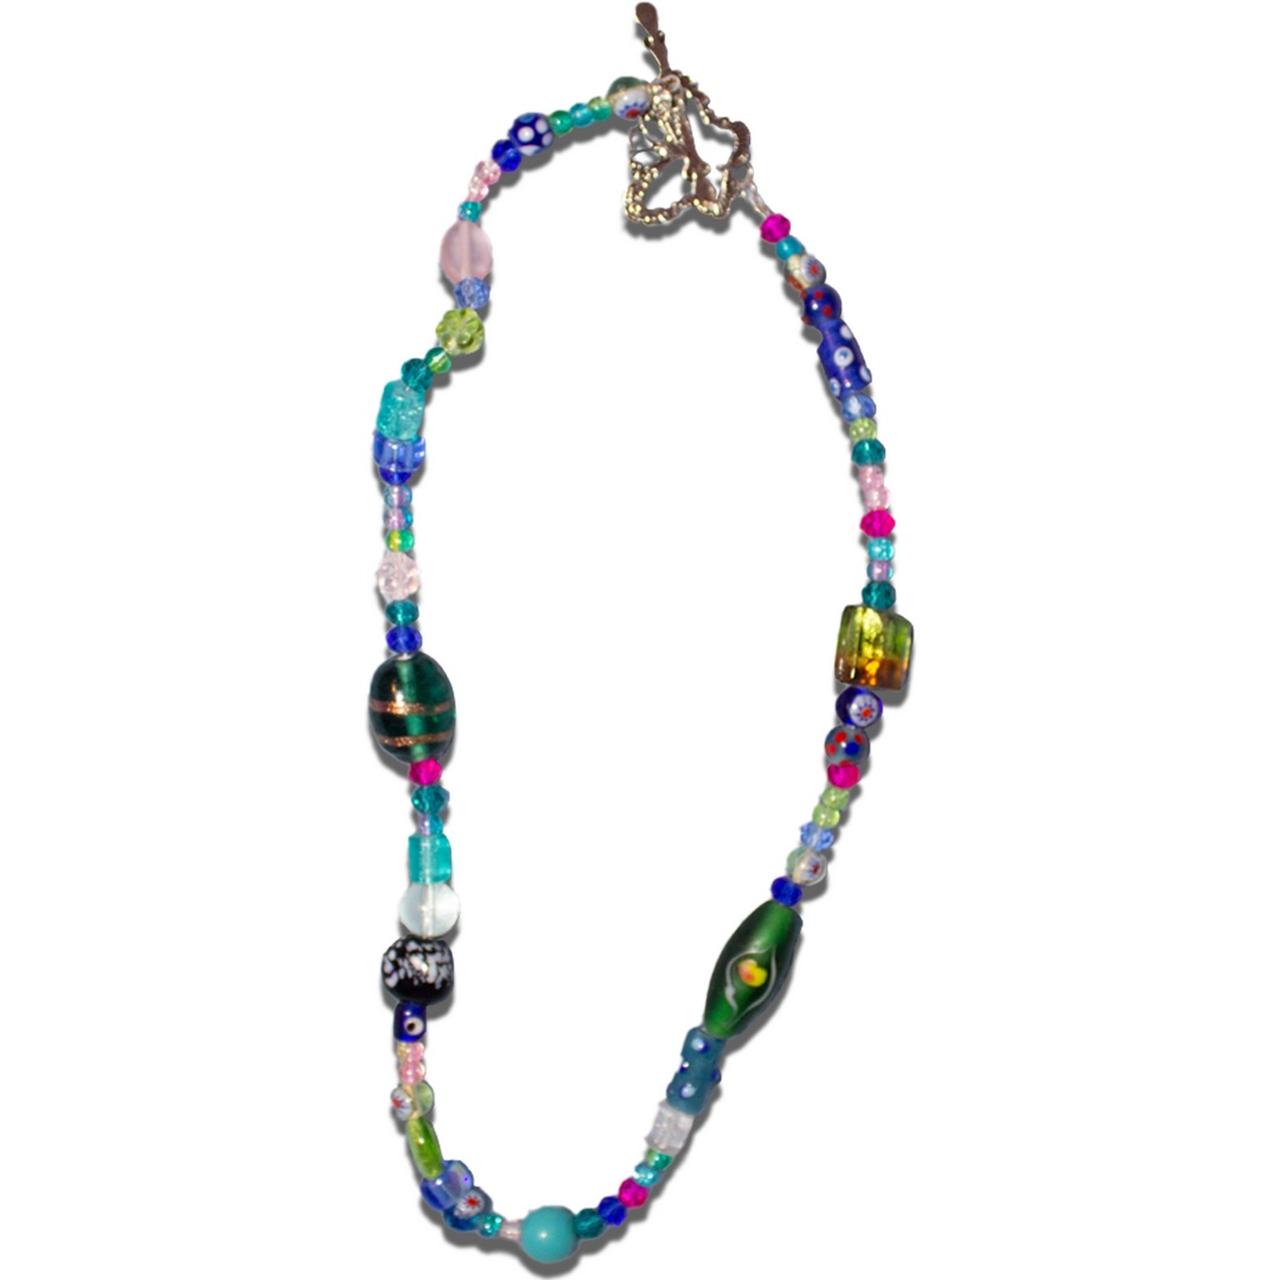 JɄ₦₭ ĐⱤ₳₩ɆⱤ 2.0 handmade mixed glass bead necklace.... - Depop